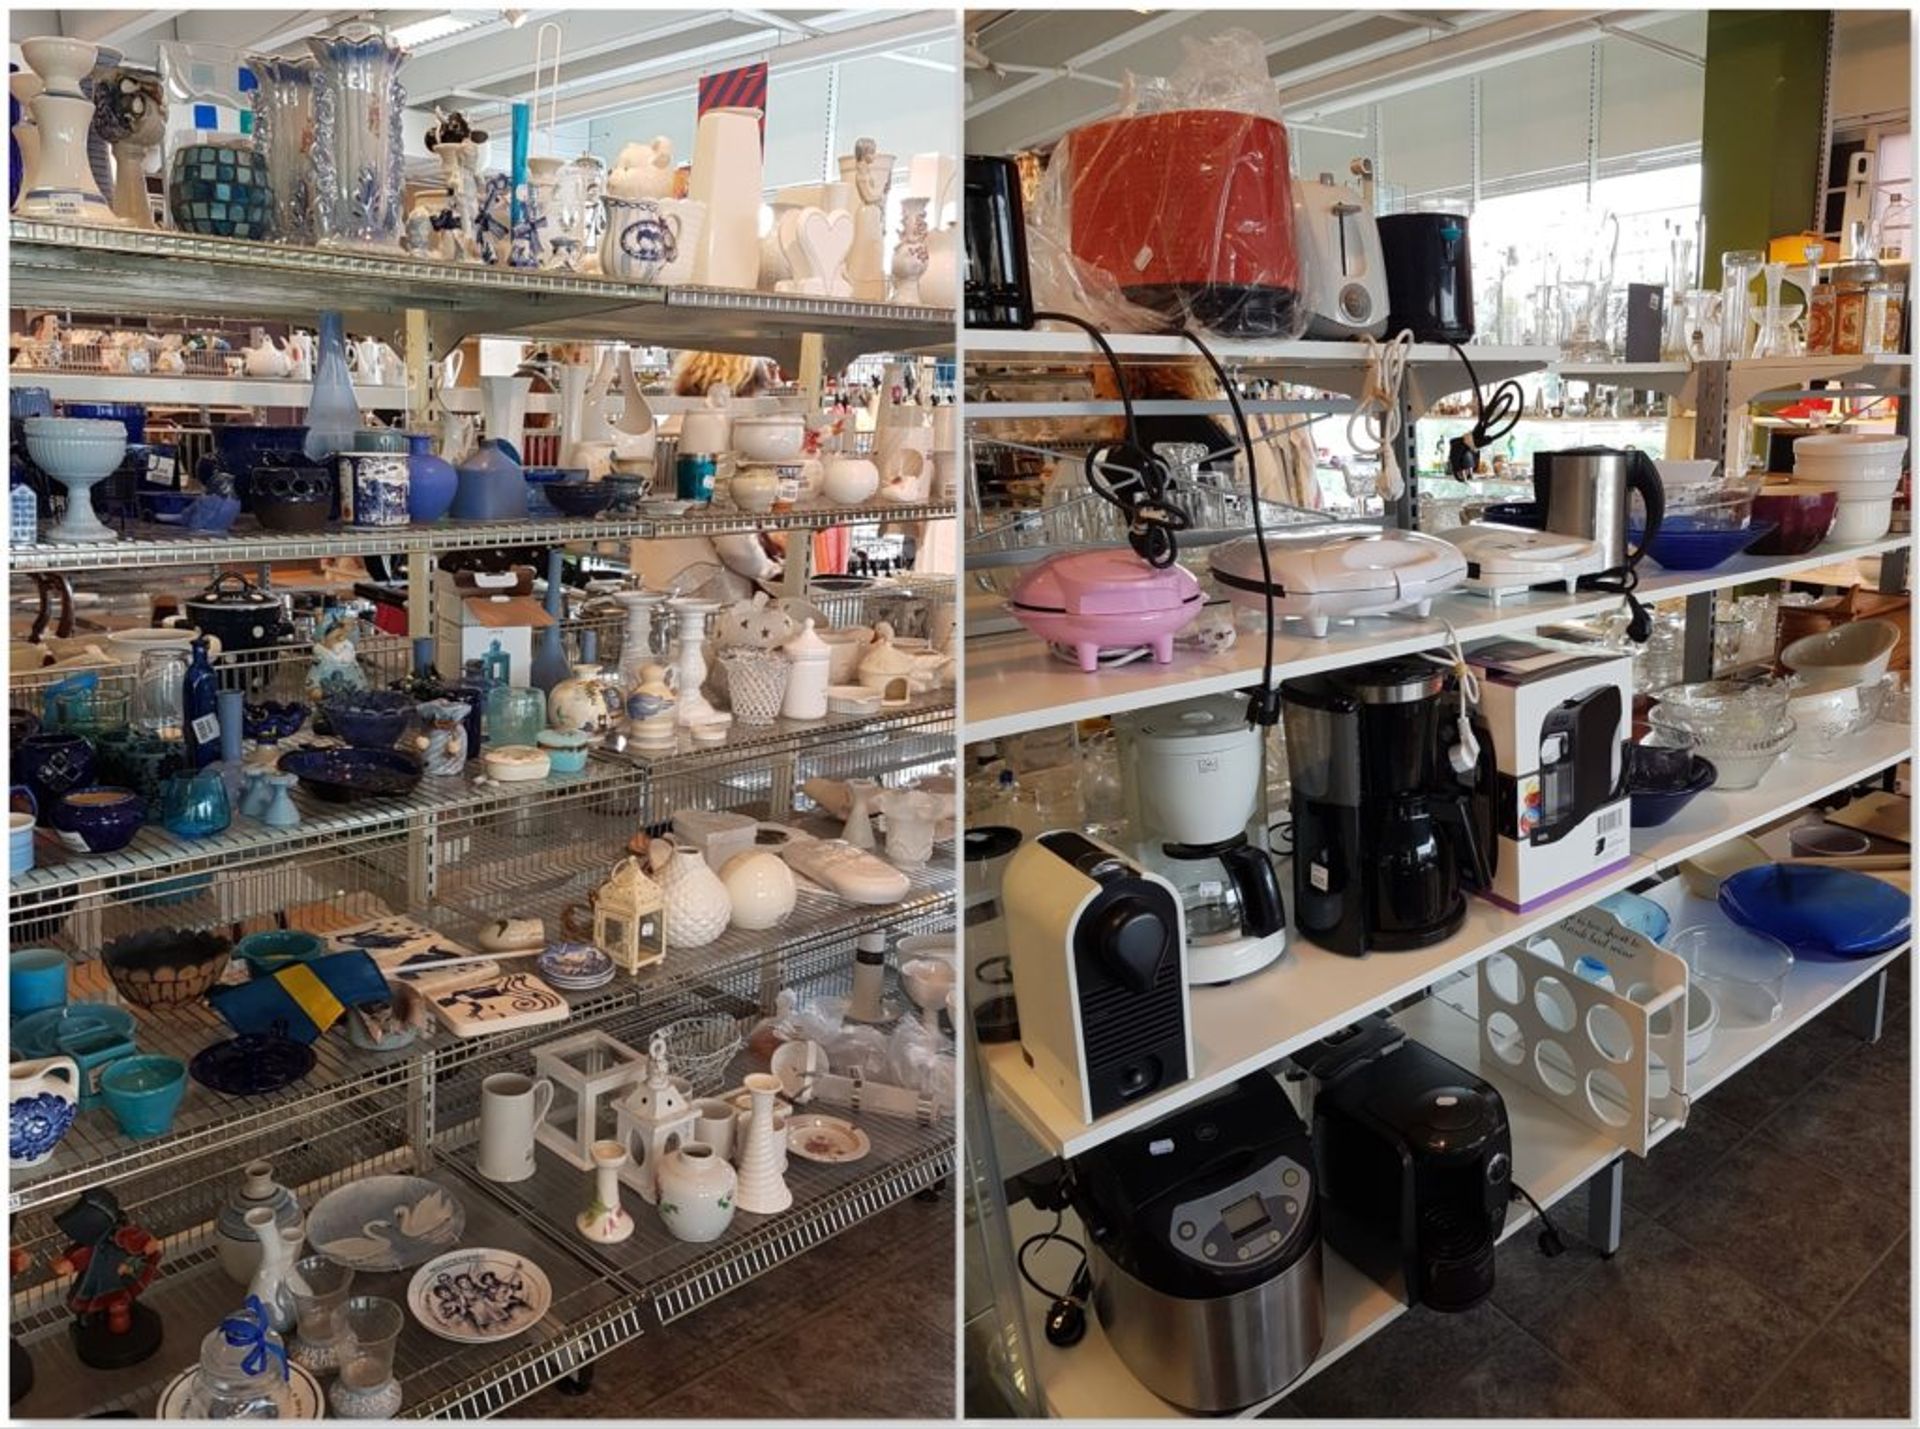 Racks of vases, ceramic items and kitchen appliances.